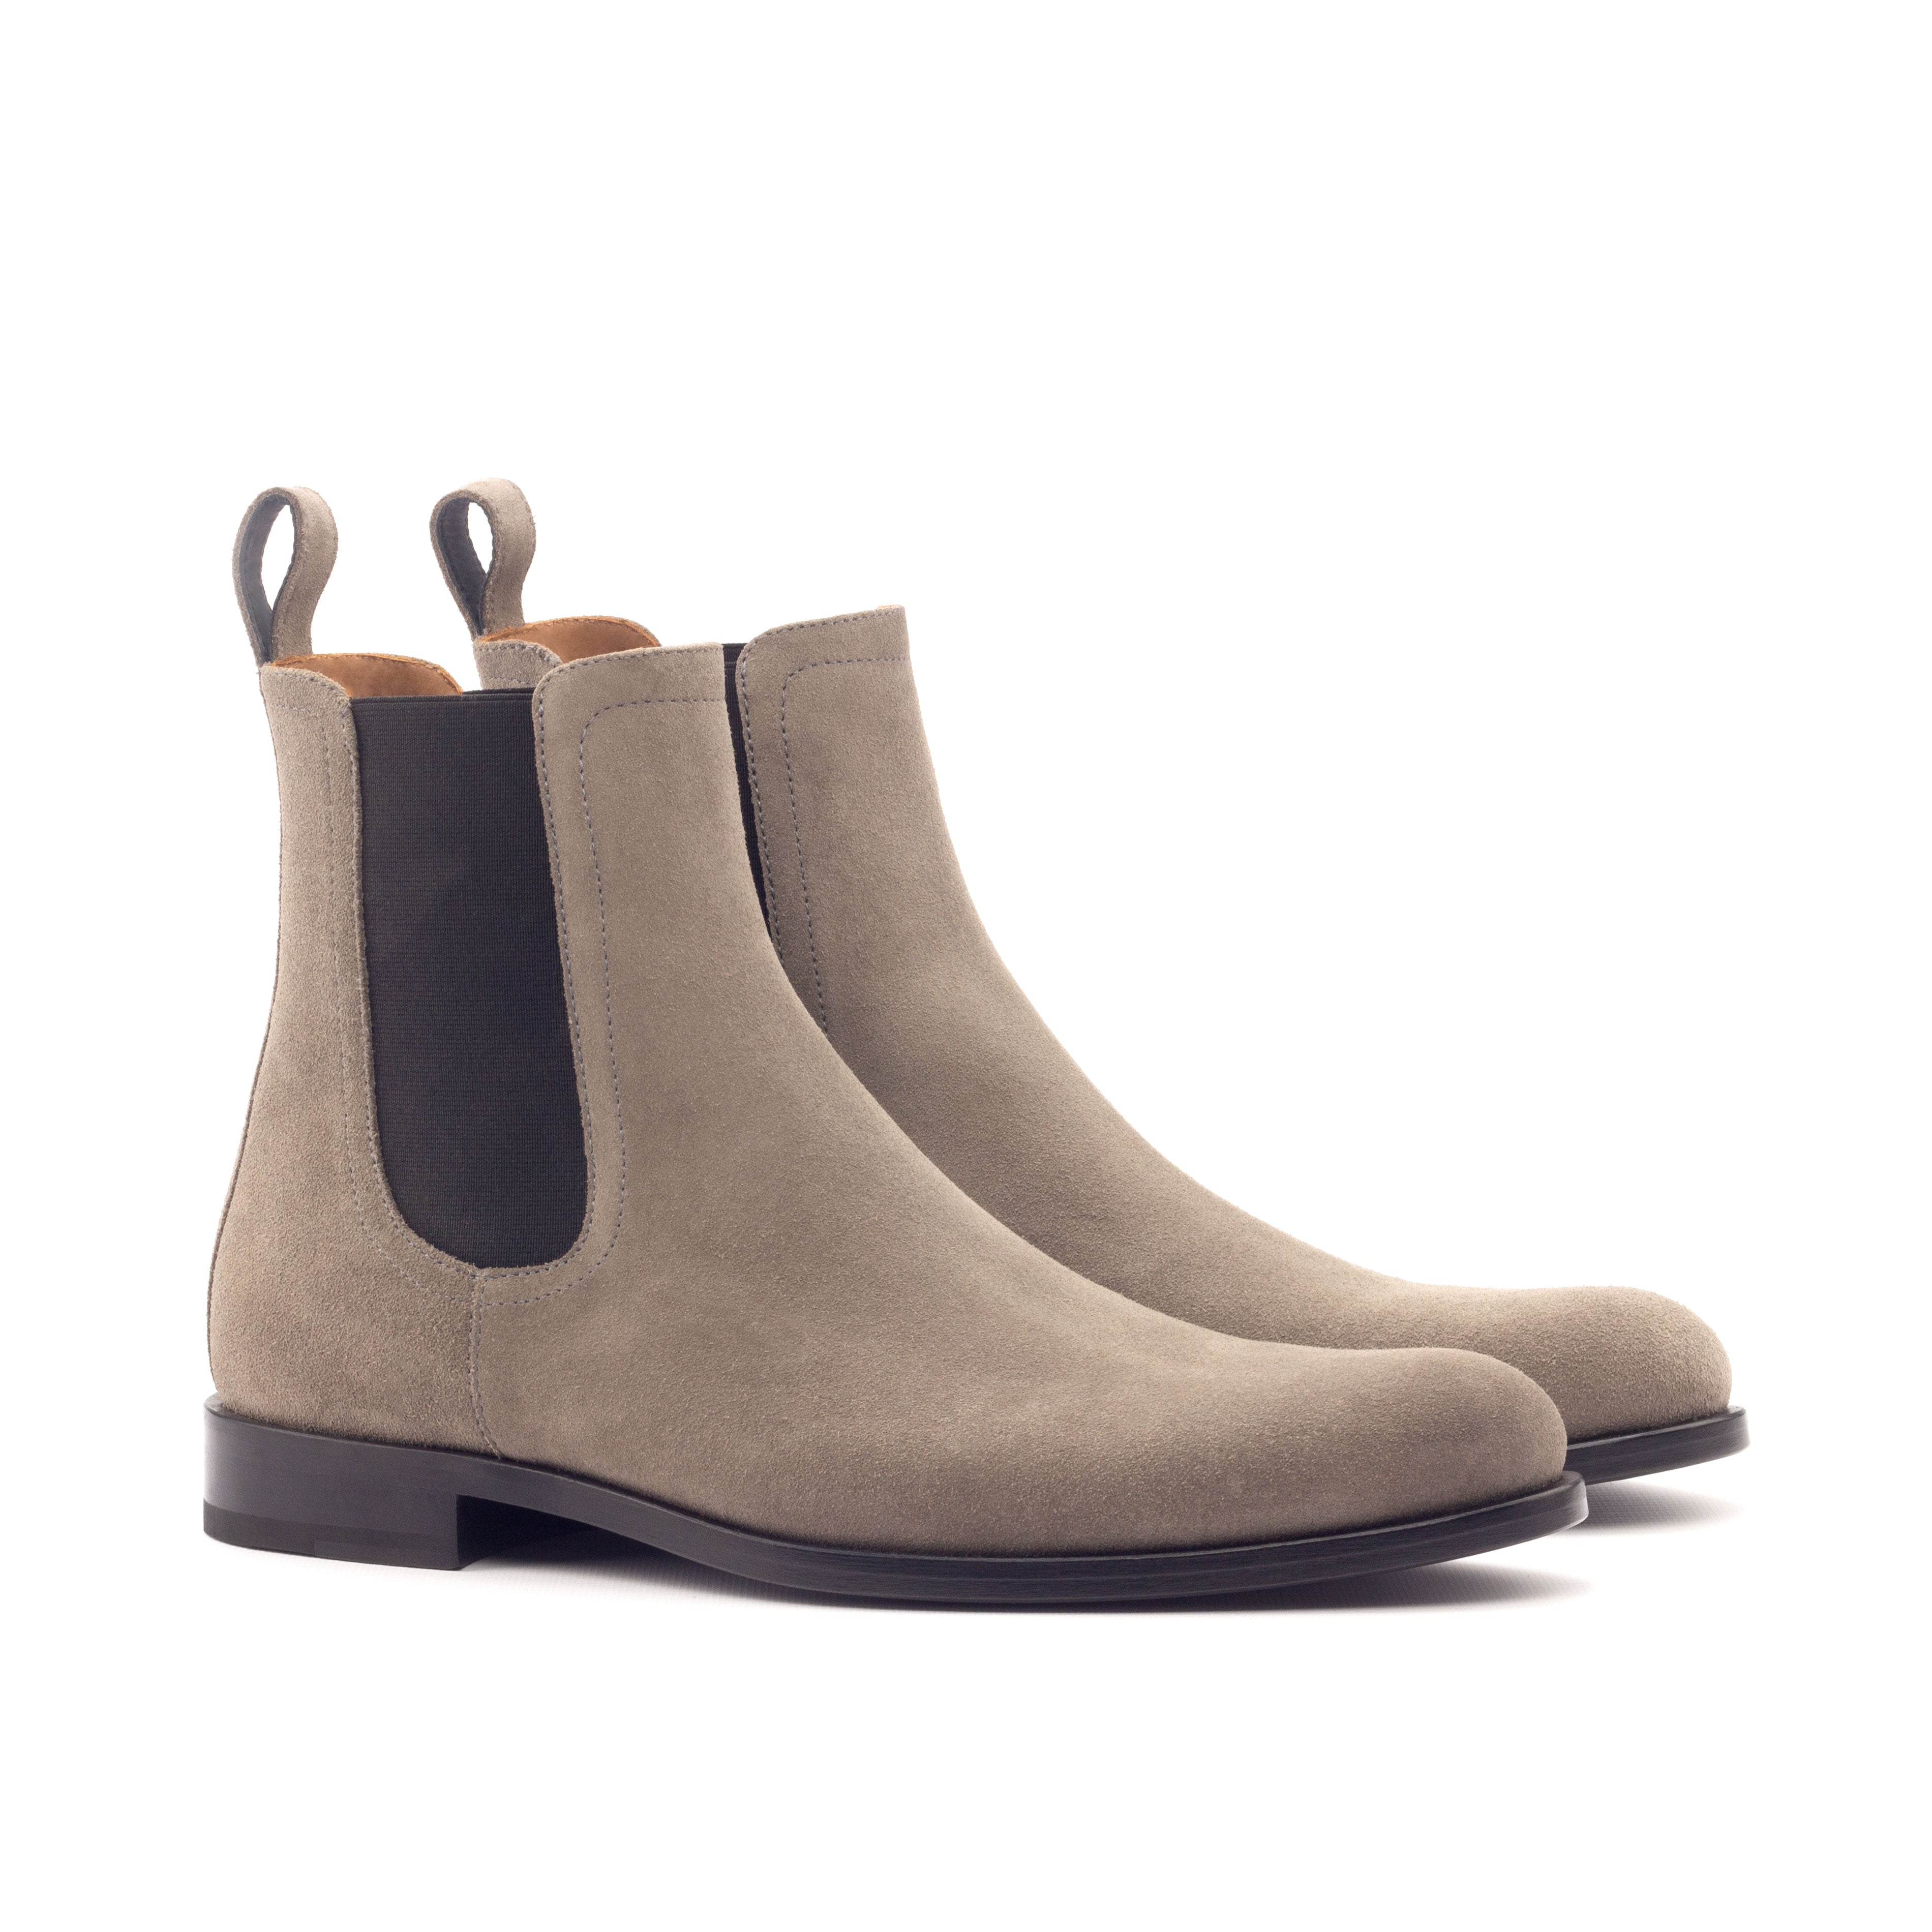 london fog raisa waterproof leather chelsea boots